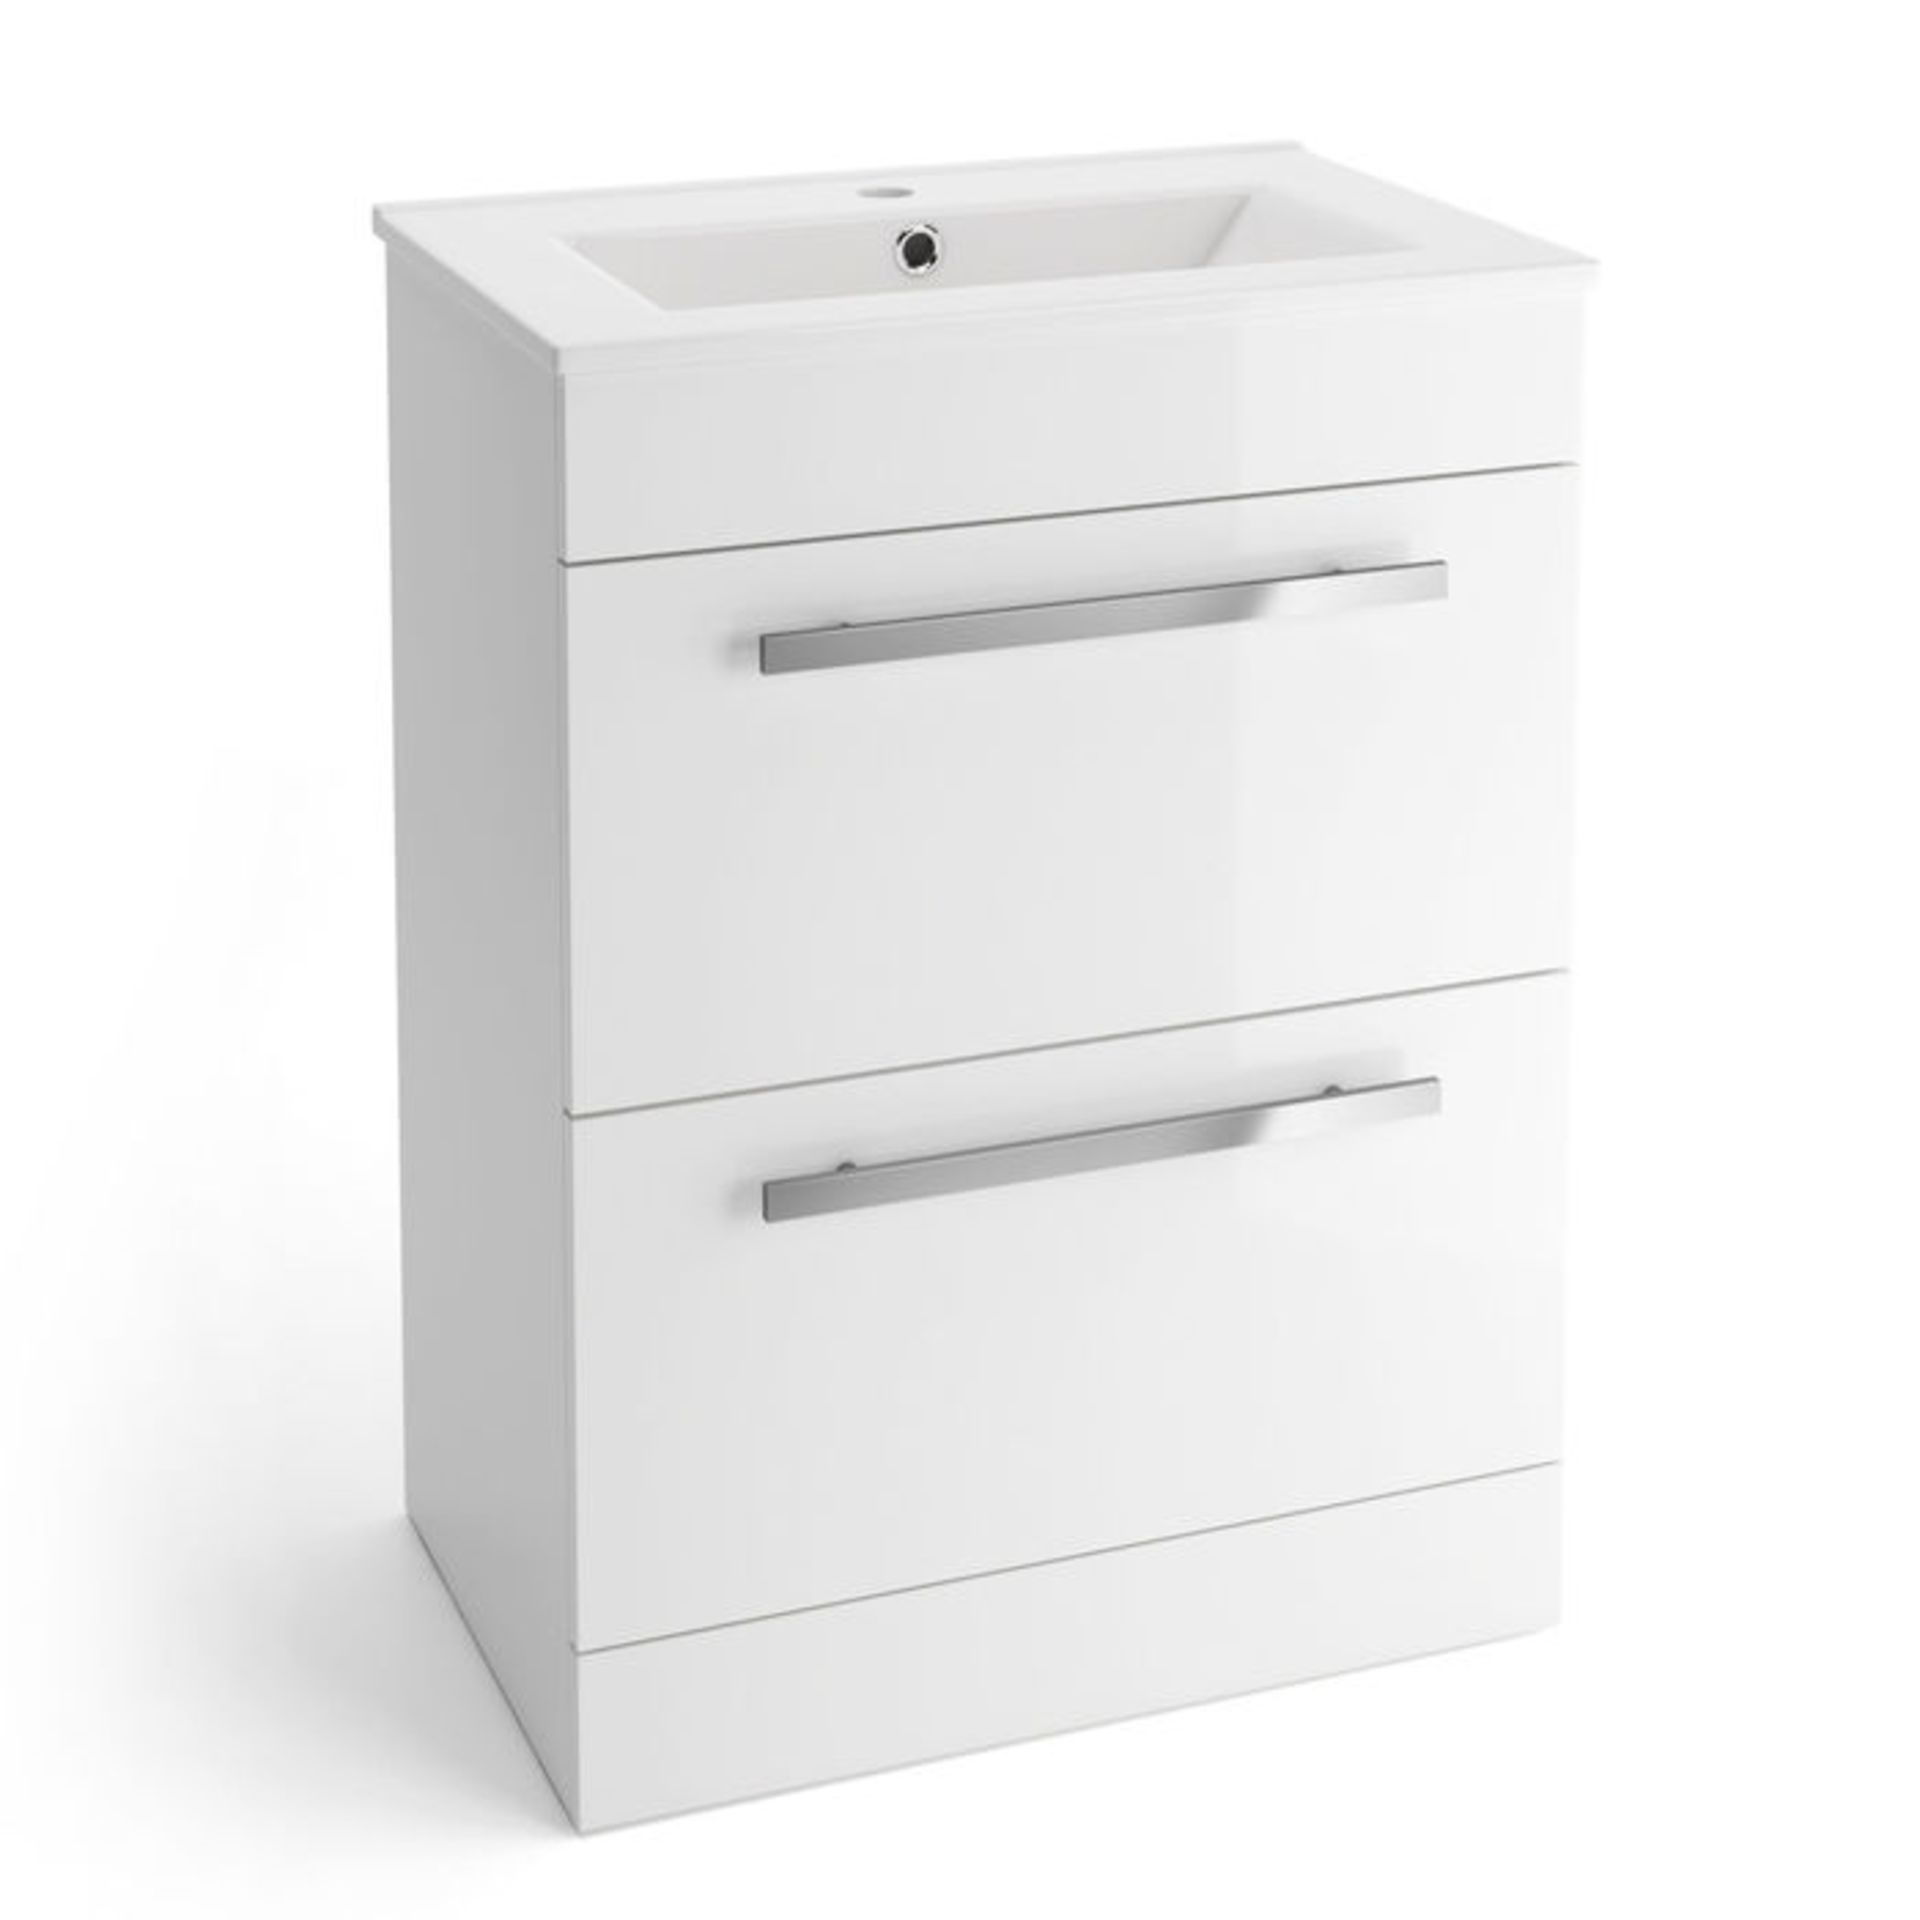 (JM31) 600mm Avon High Gloss White Double Drawer Basin Cabinet - Floor Standing. RRP £499.99. - Image 5 of 5